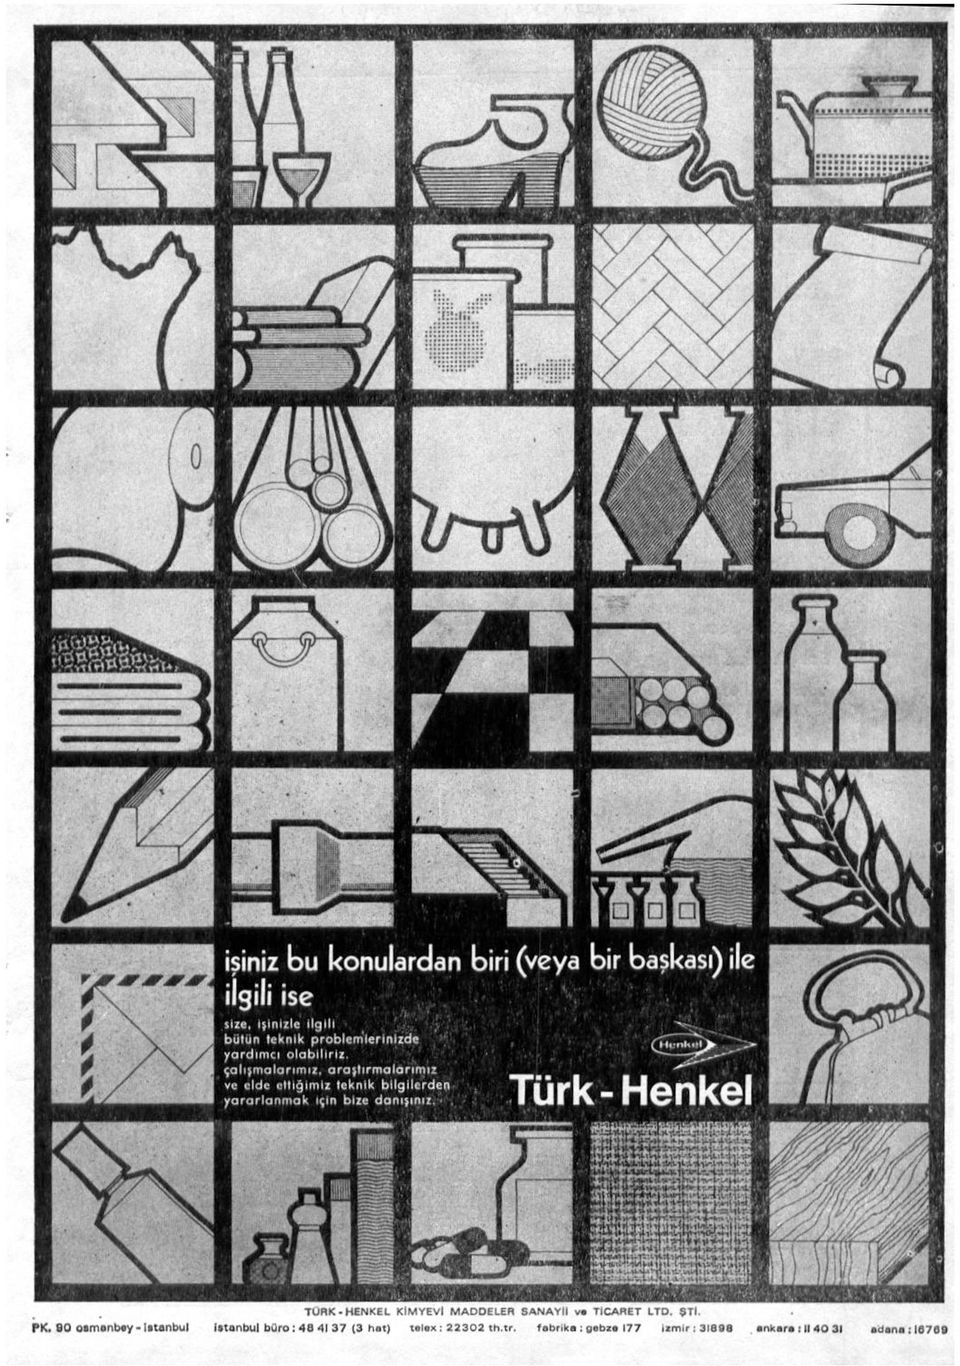 Türk-Henkel <v3i».ii ^ Ay.: ti' T U R K - H E N K E L KİMYEVİ MADDELER SANAYİİ v» TİCARET LTD. 9TI. PK.